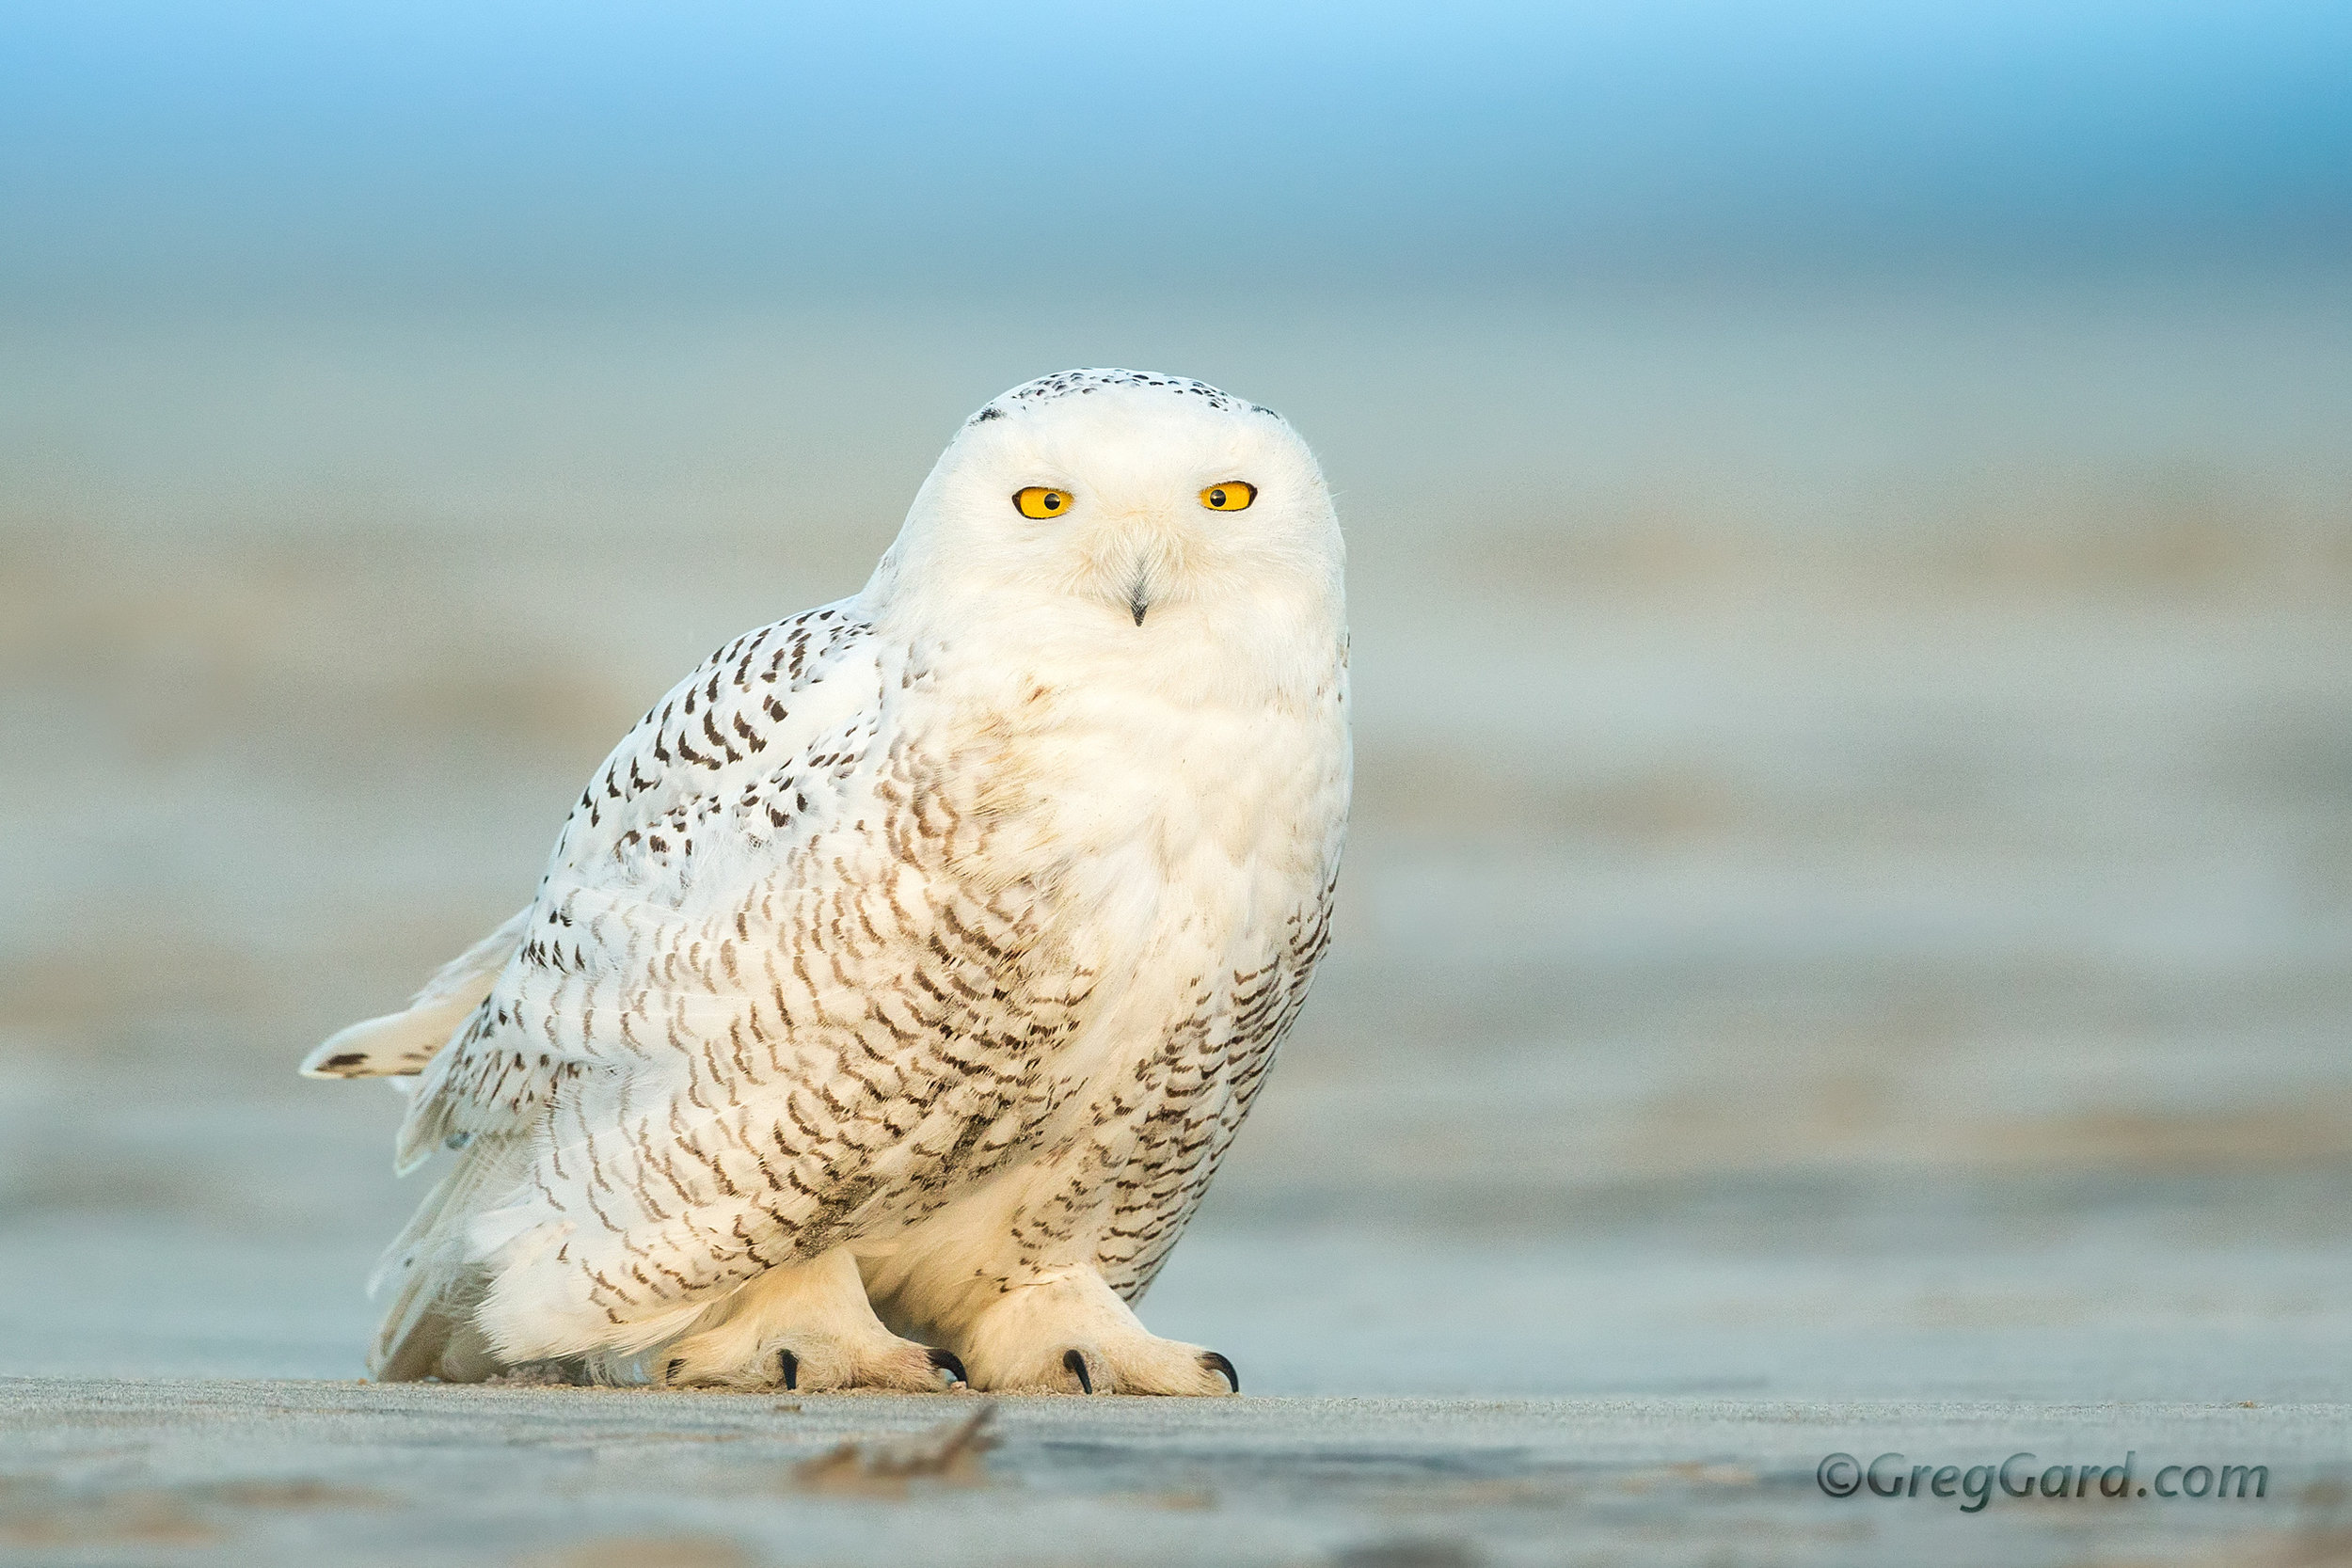 Snowy Owl standing on the beach